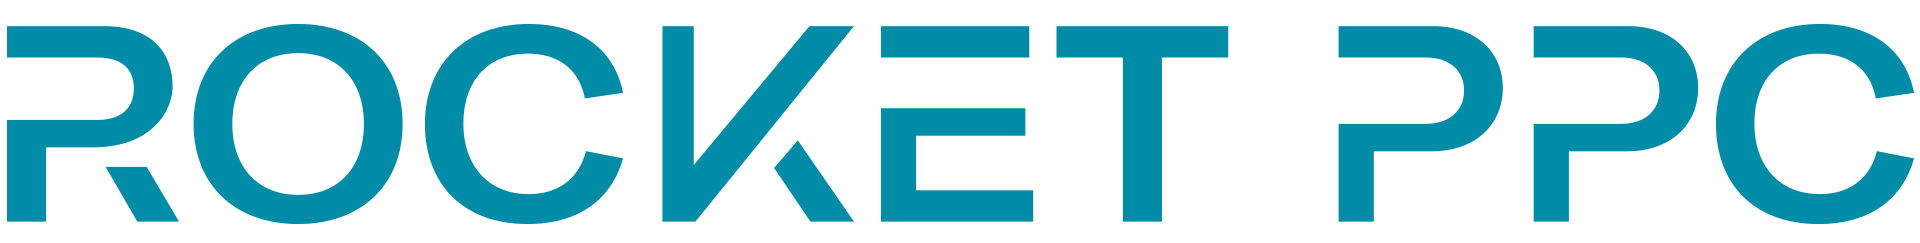 Rocket PPC logo